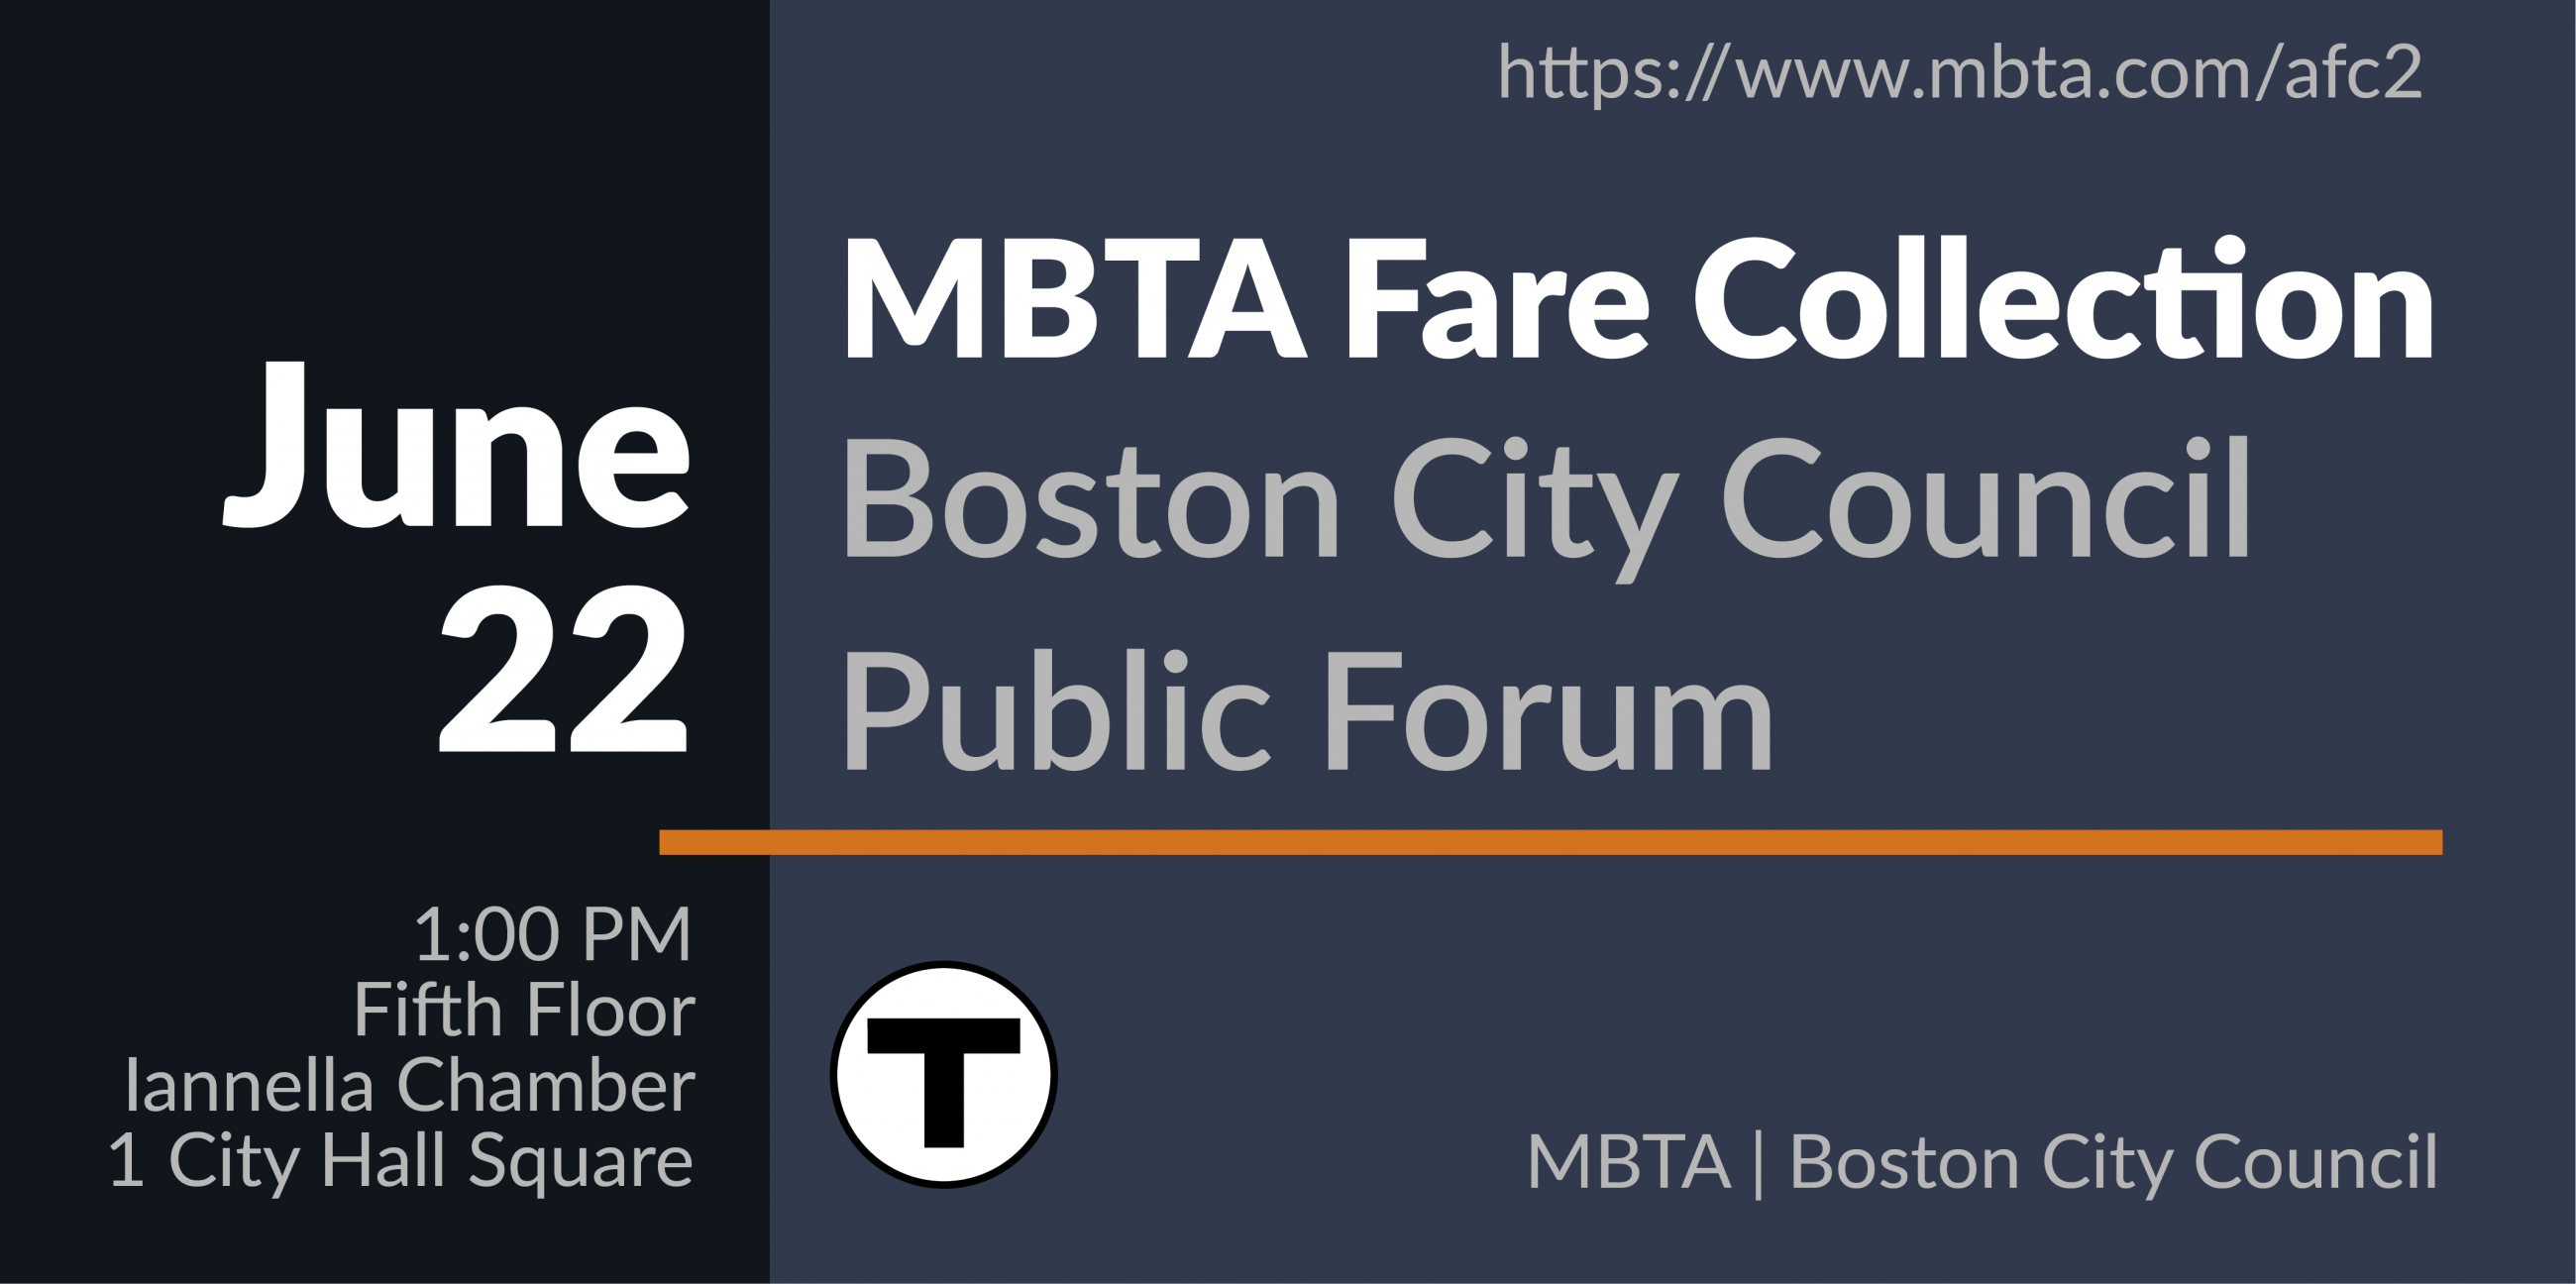 MBTA Fare Collection Boston City Council Public Forum